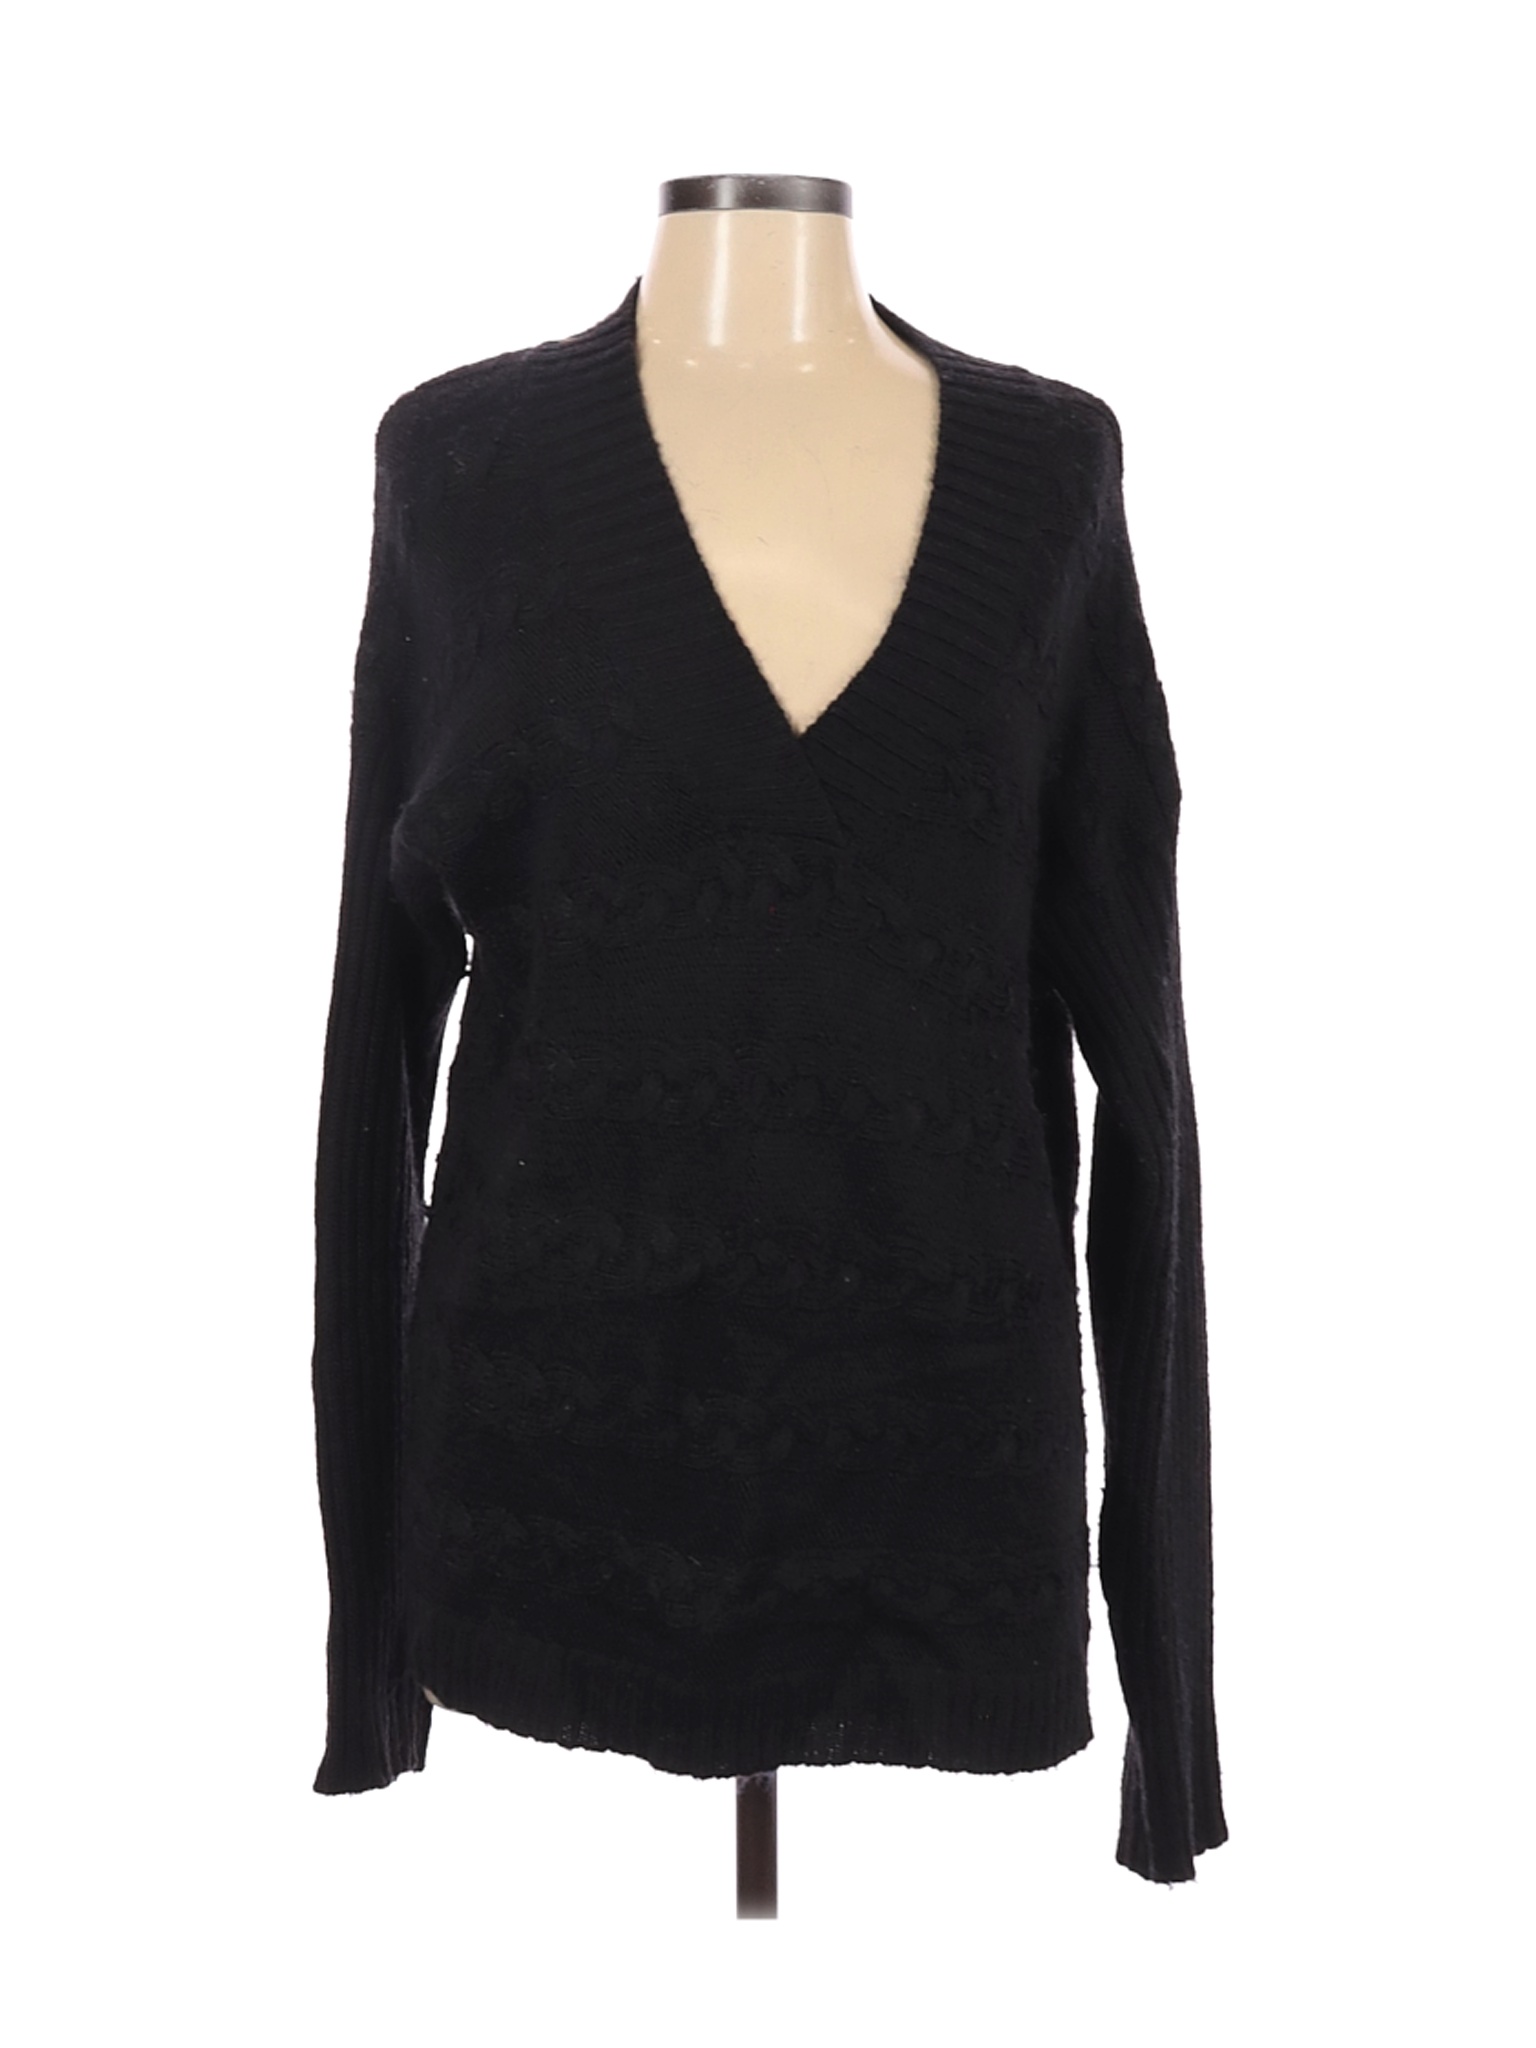 Jones New York Women Black Pullover Sweater L | eBay